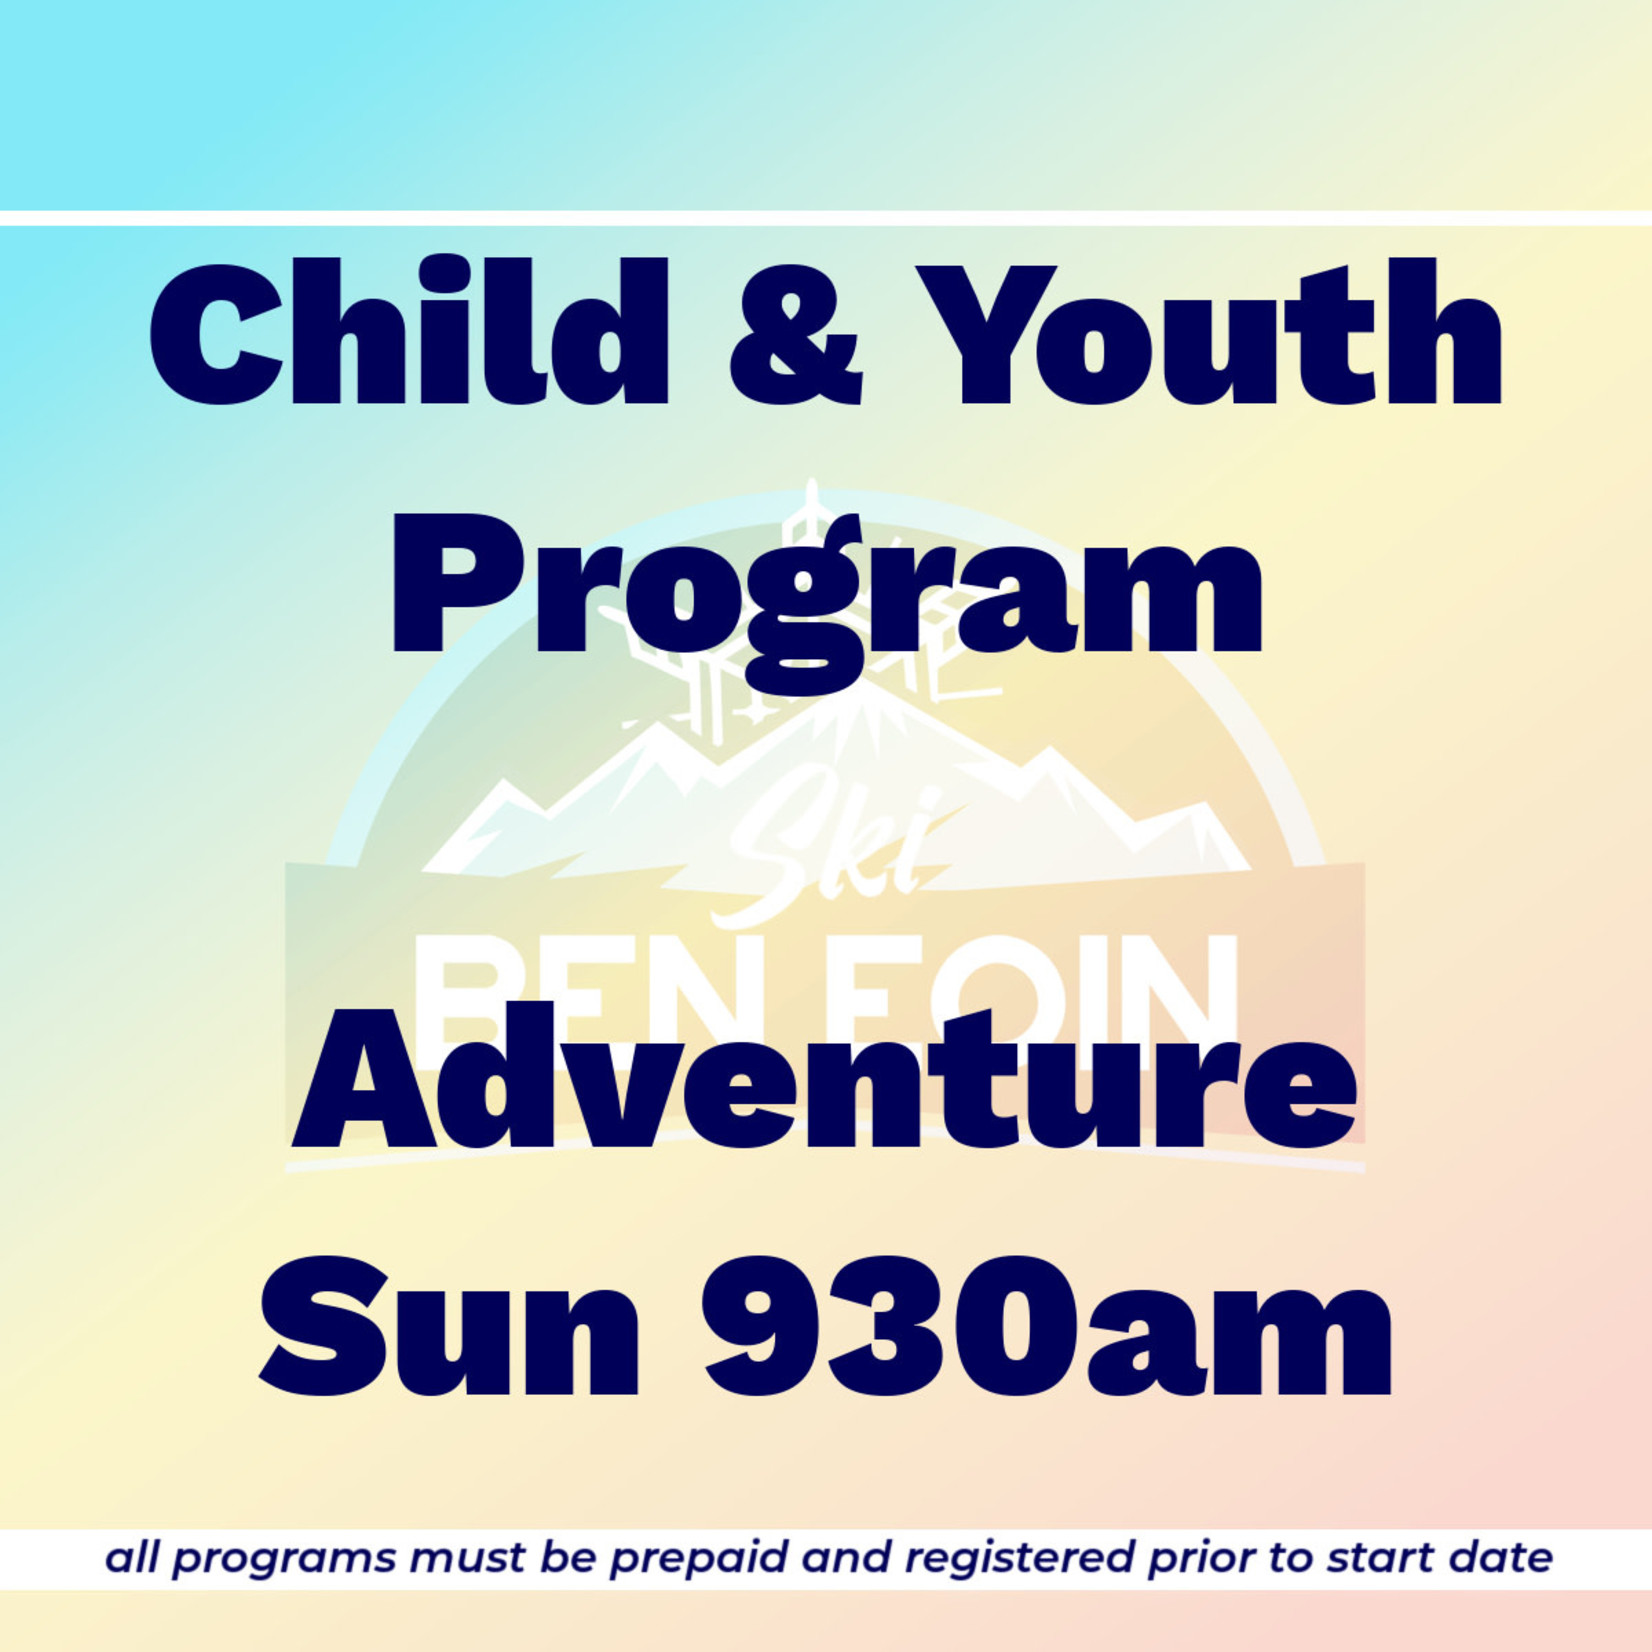 Child & Youth Ski Program Adventure Sun 930am